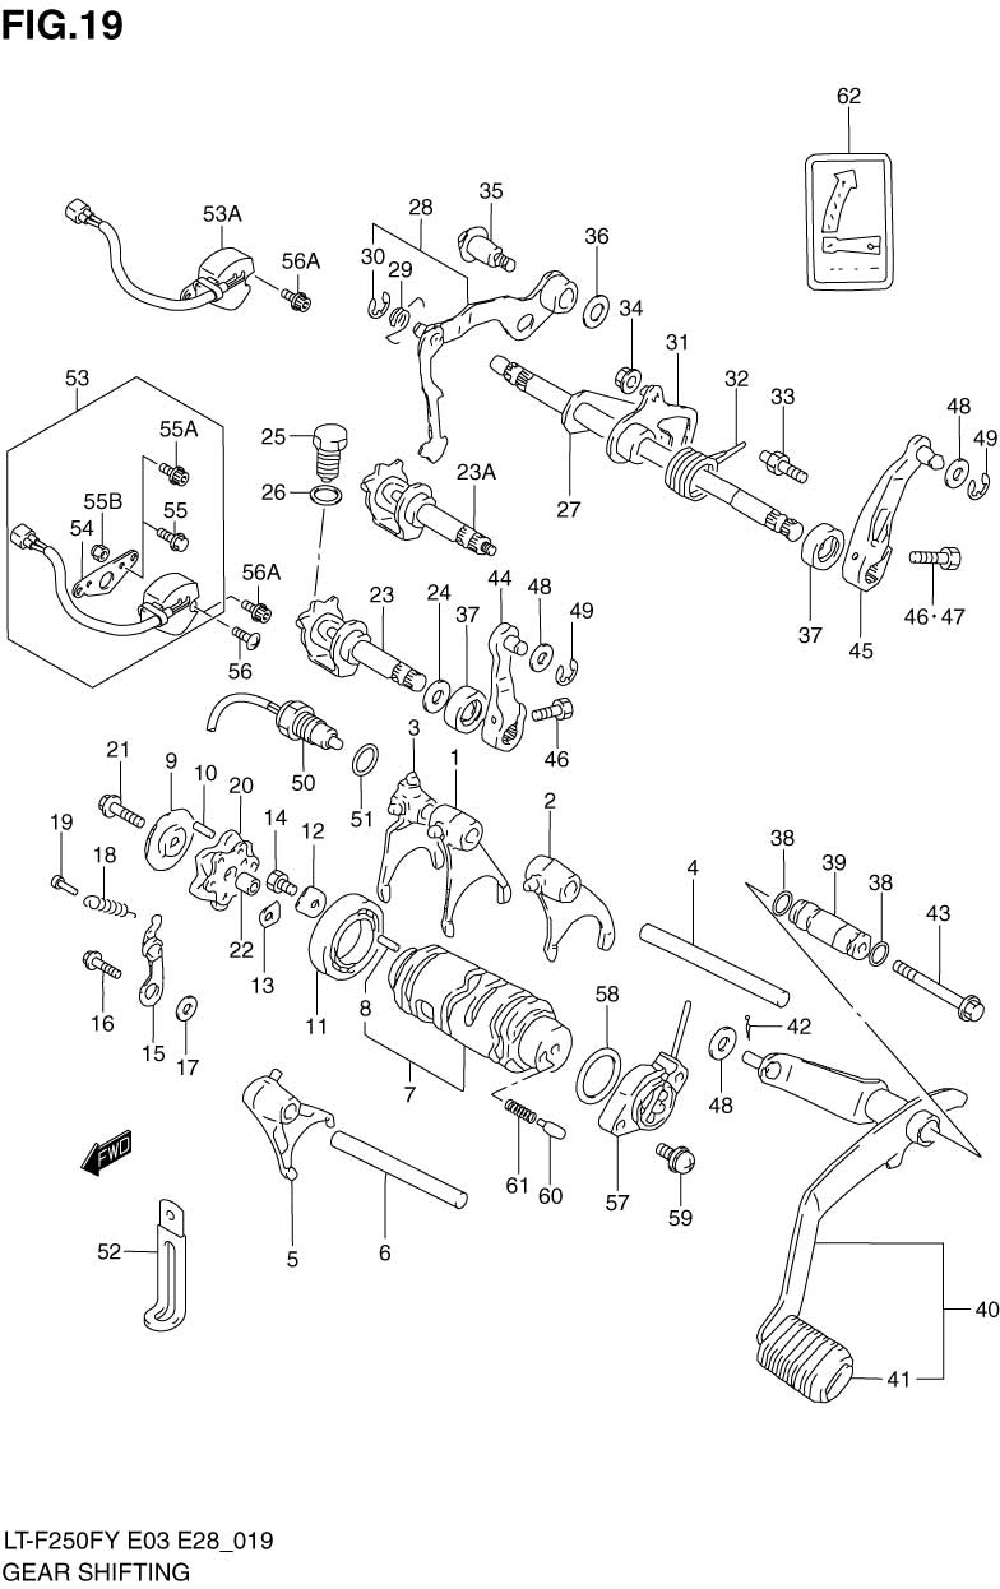 Suzuki Quadrunner 250 Wiring Diagram from diagramweb.net